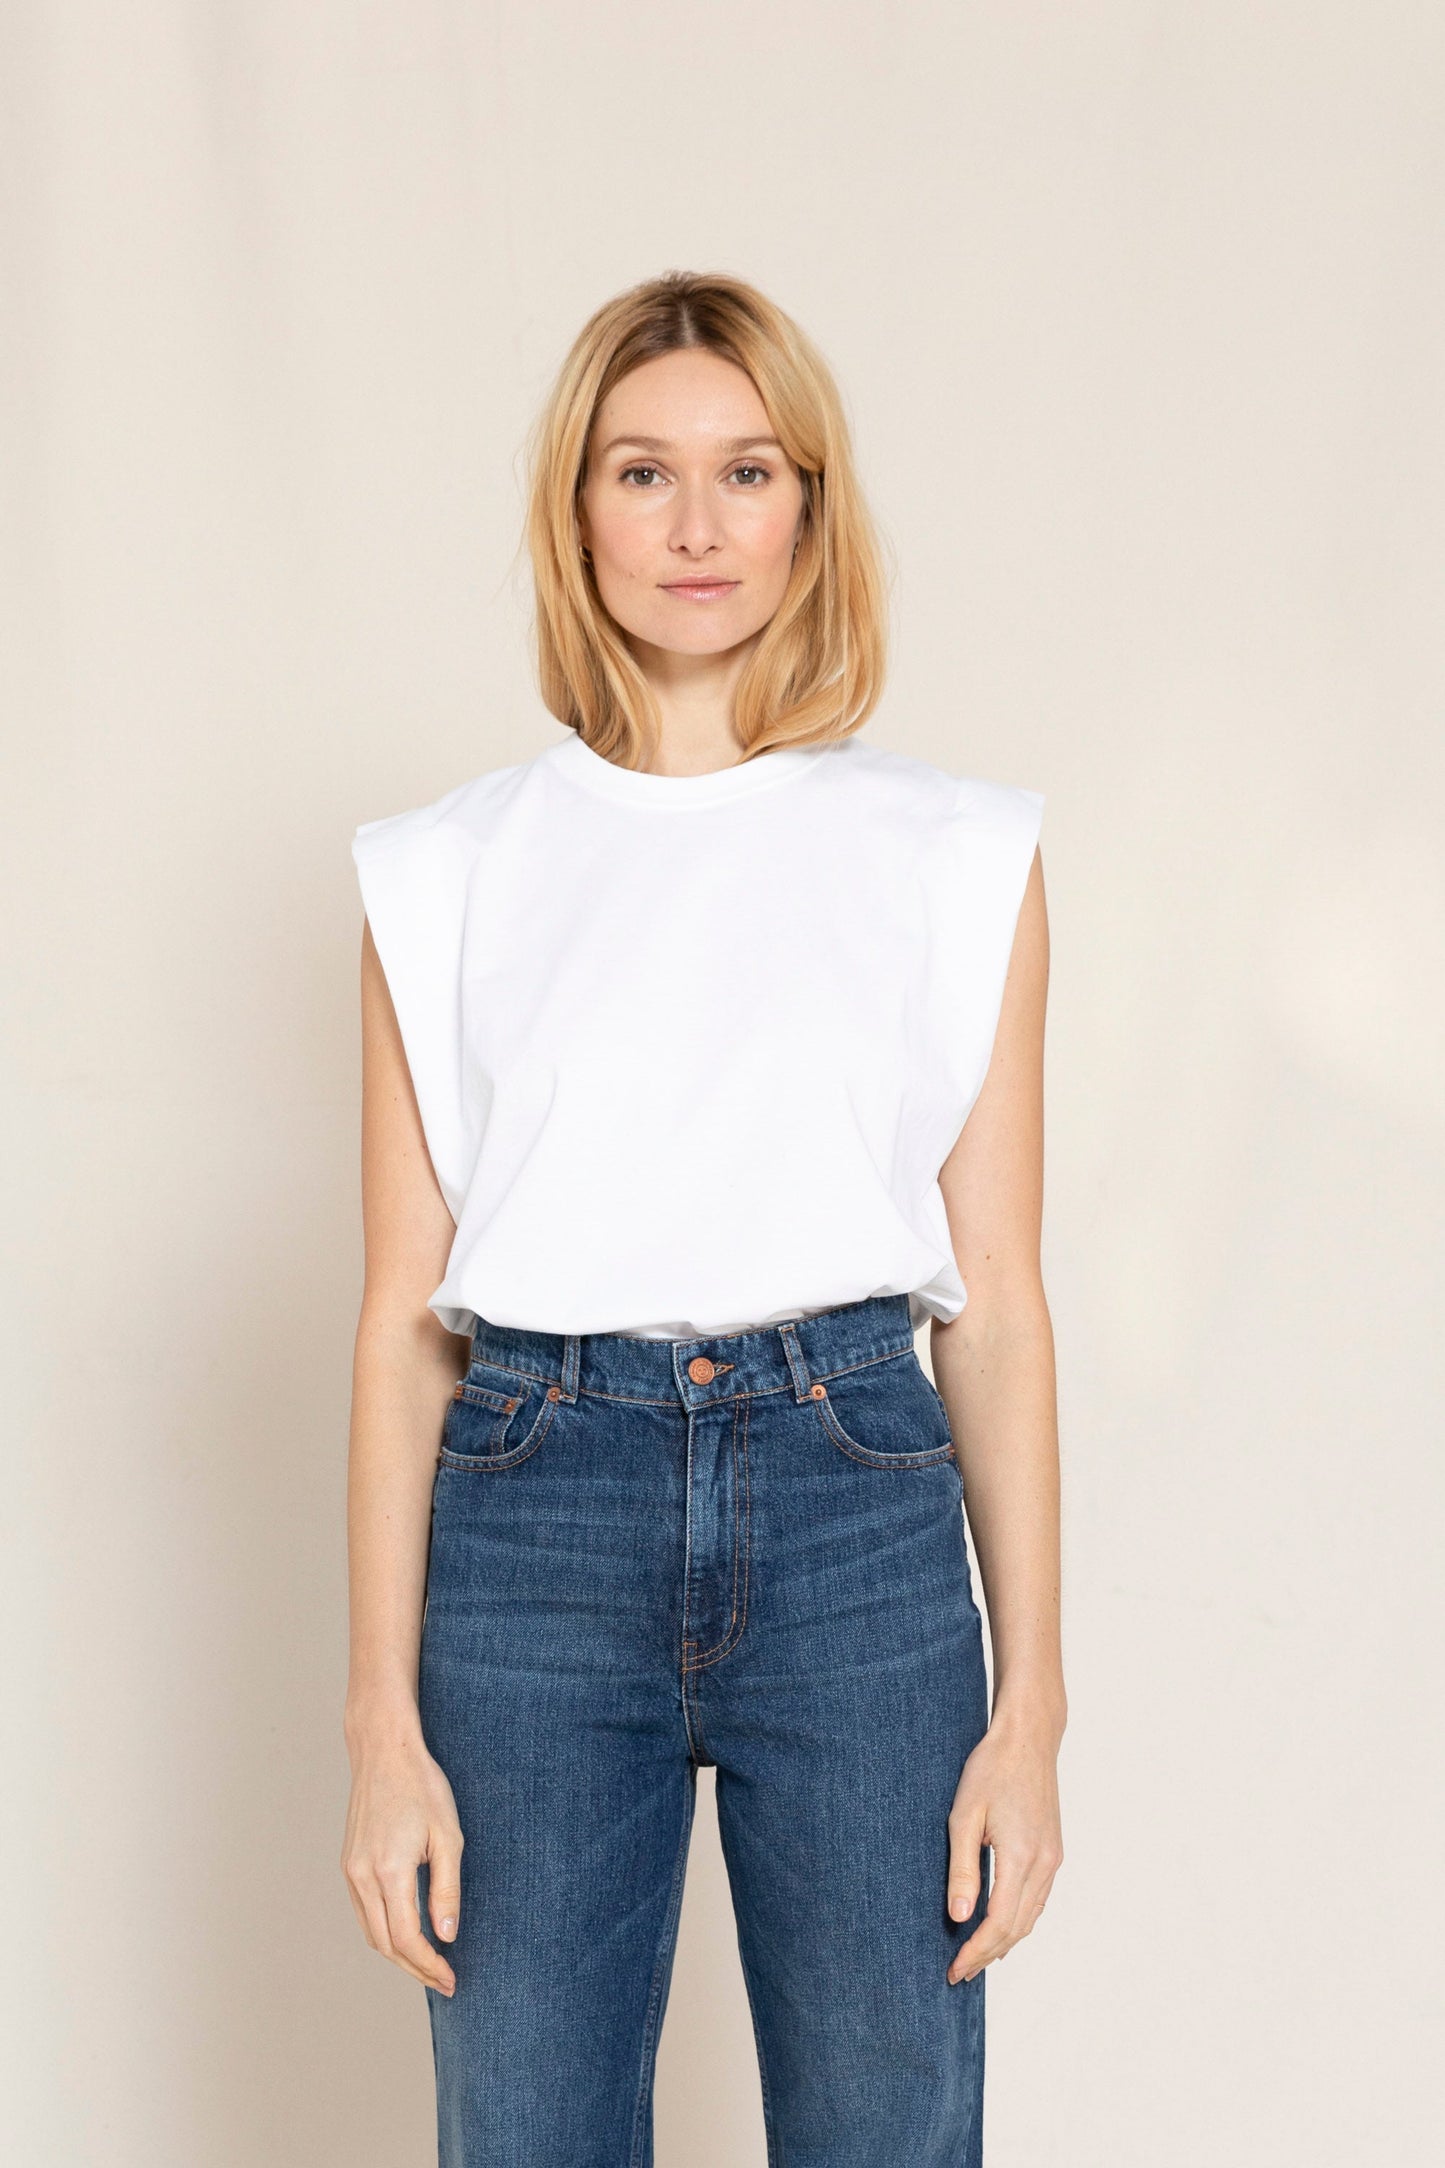 SC 003 White - Sleeveless T Shirt | Women